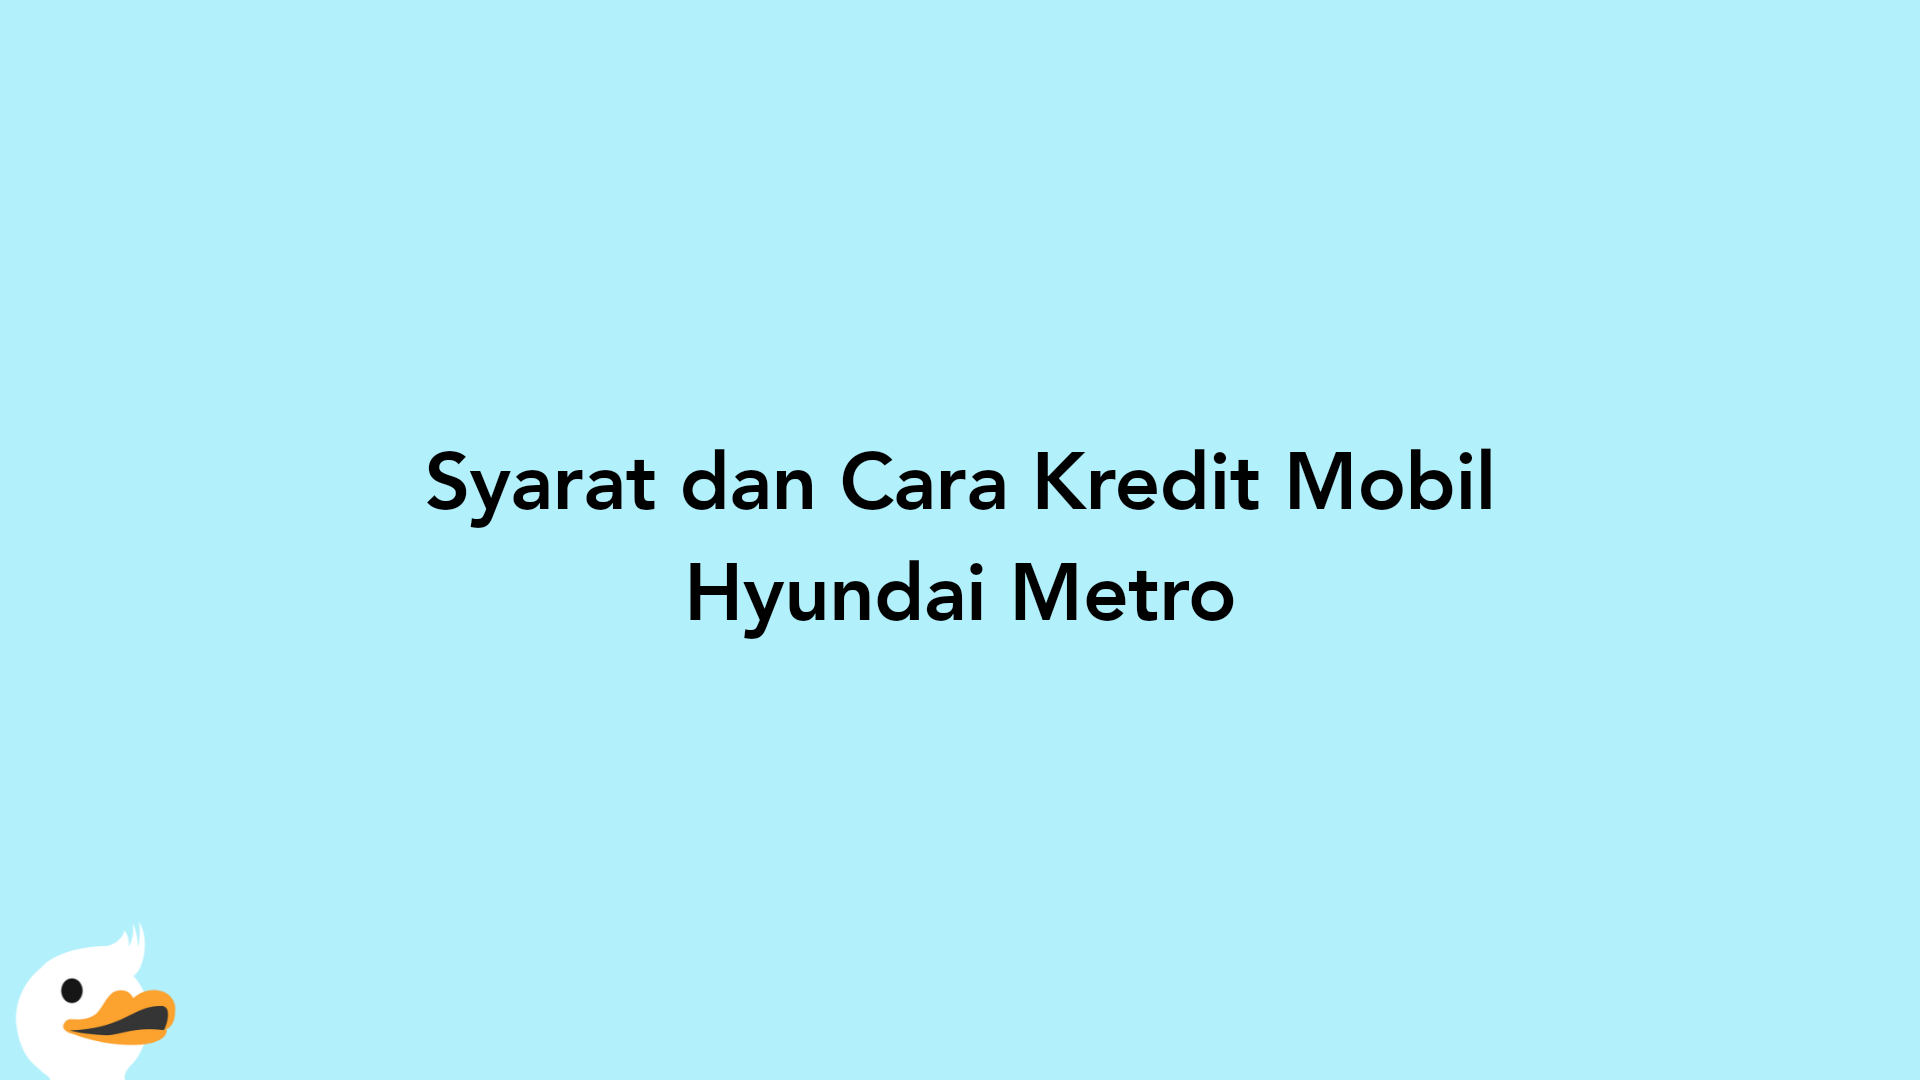 Syarat dan Cara Kredit Mobil Hyundai Metro